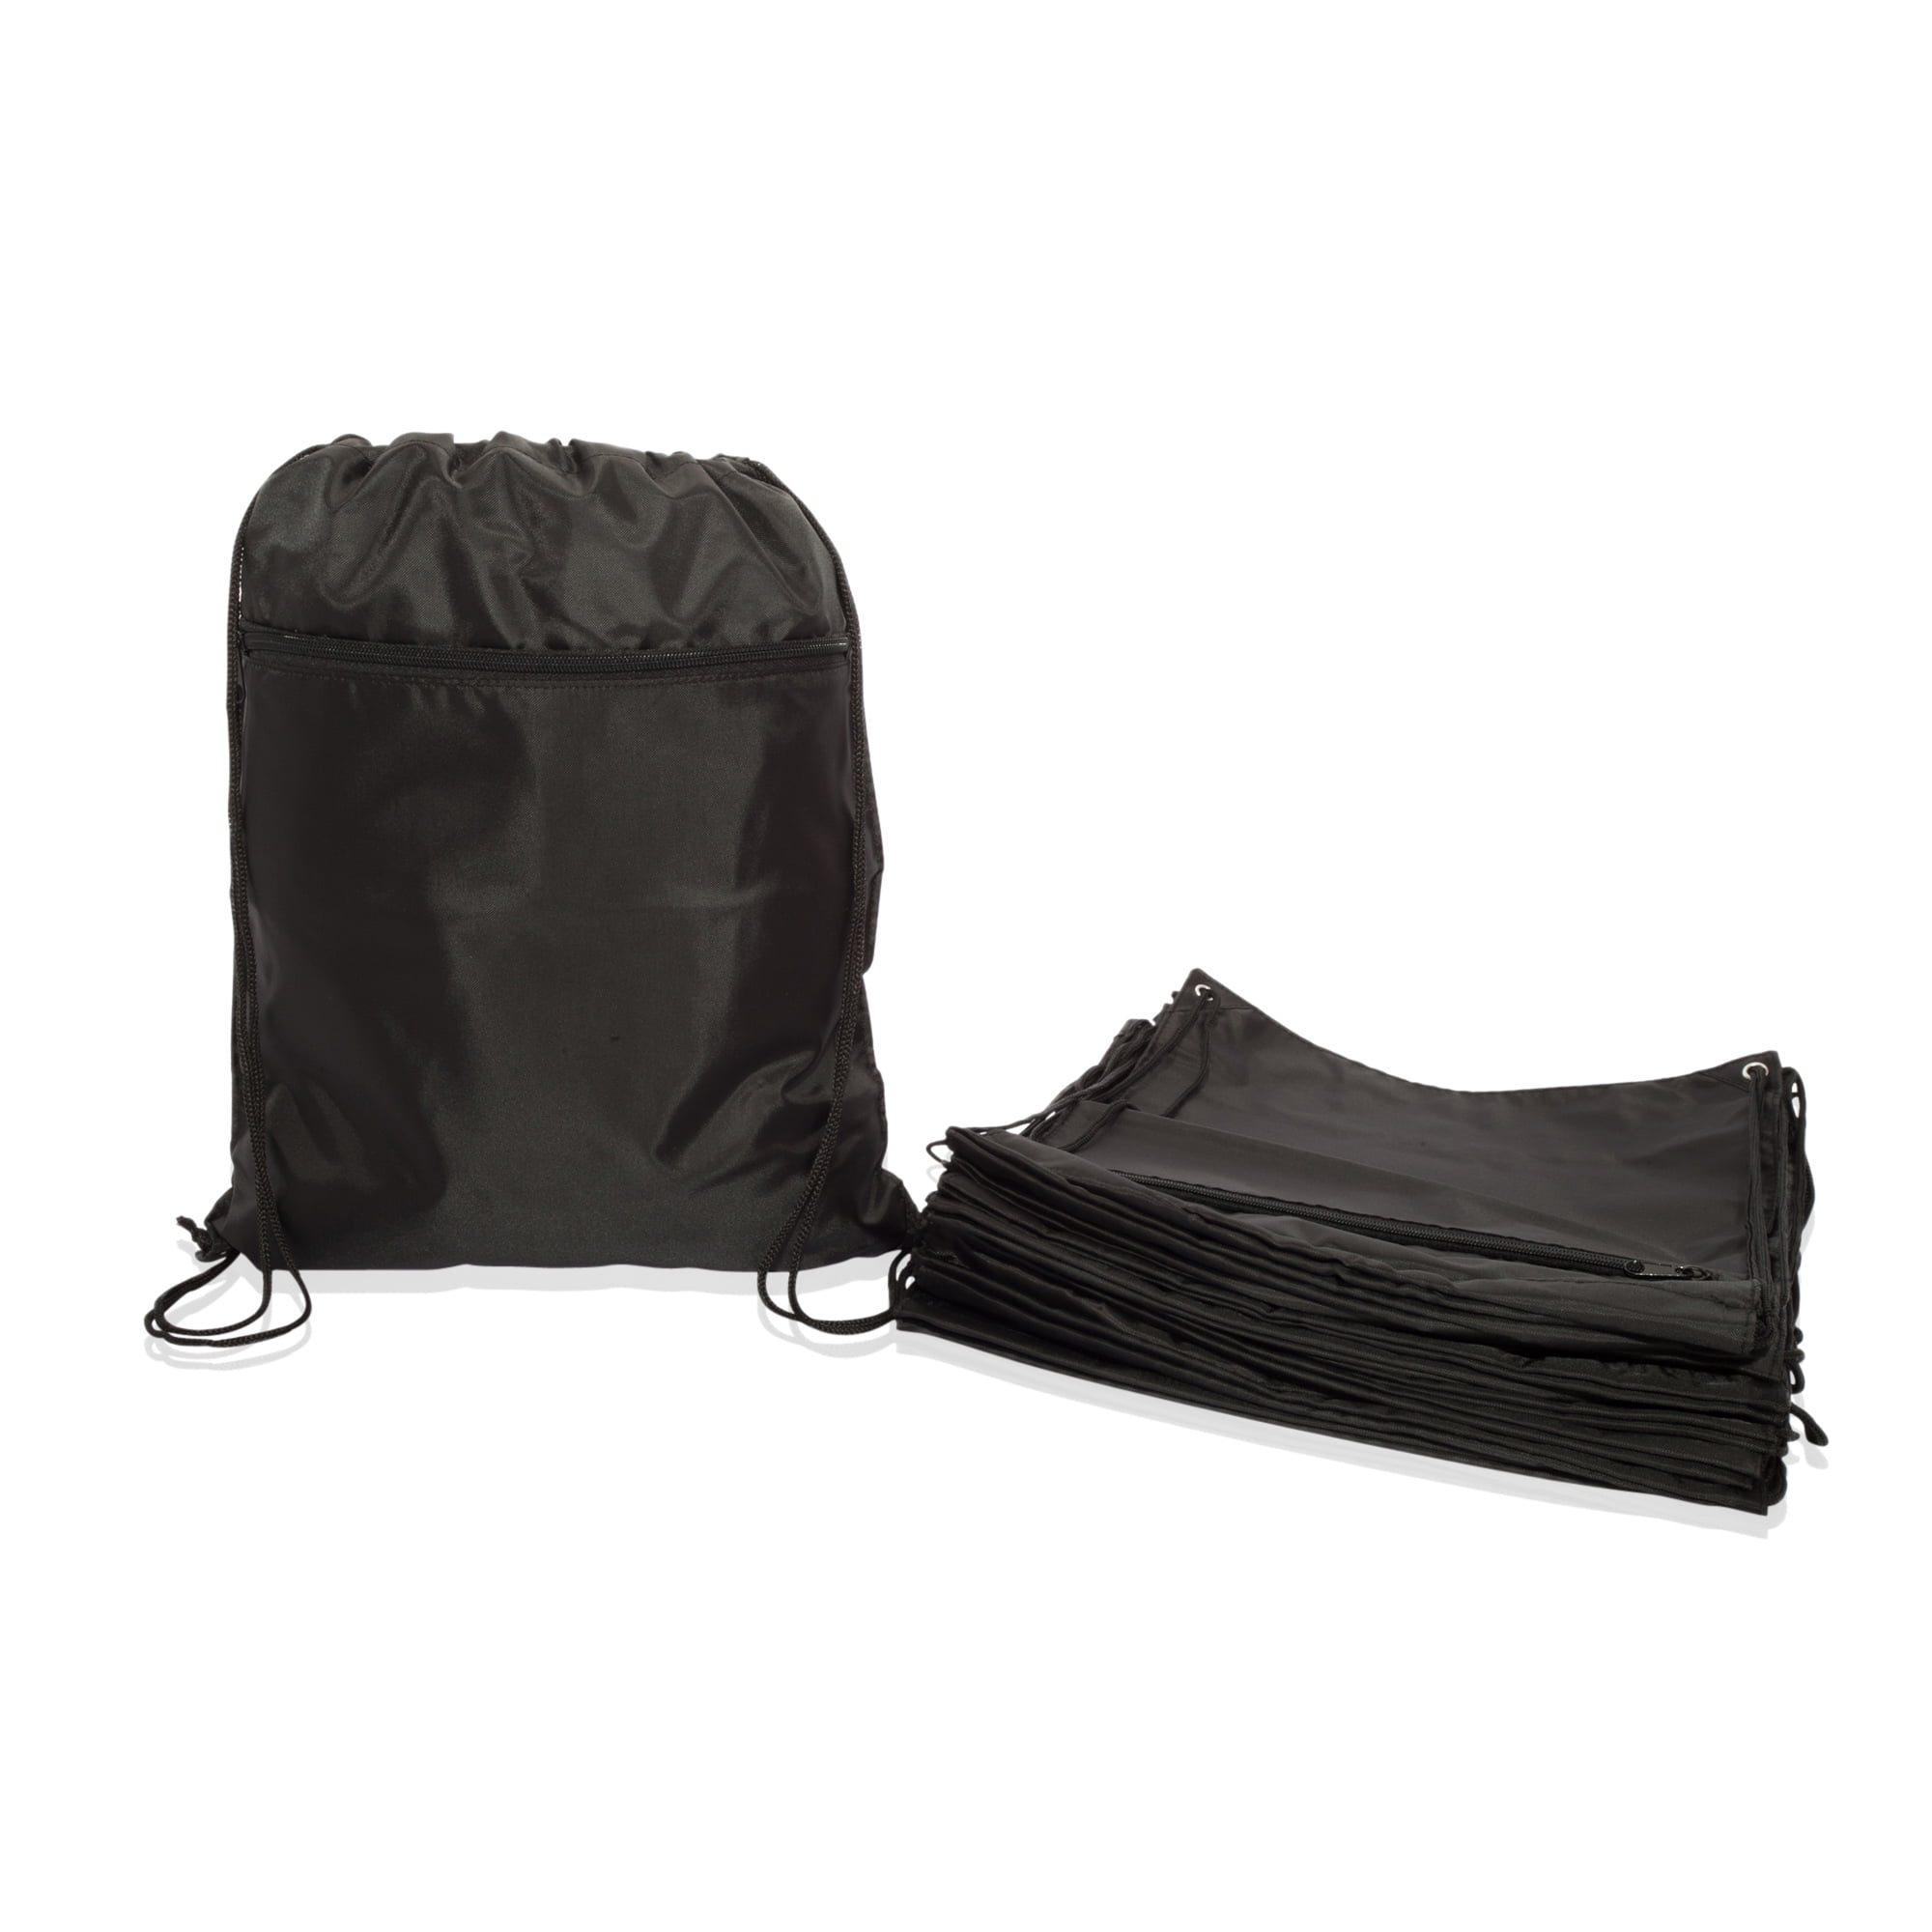 Drawstring Bag Mario Gym Sport Bags Cinch Sacks Travel Hiking Backpack for Men Women Sac de Sport 